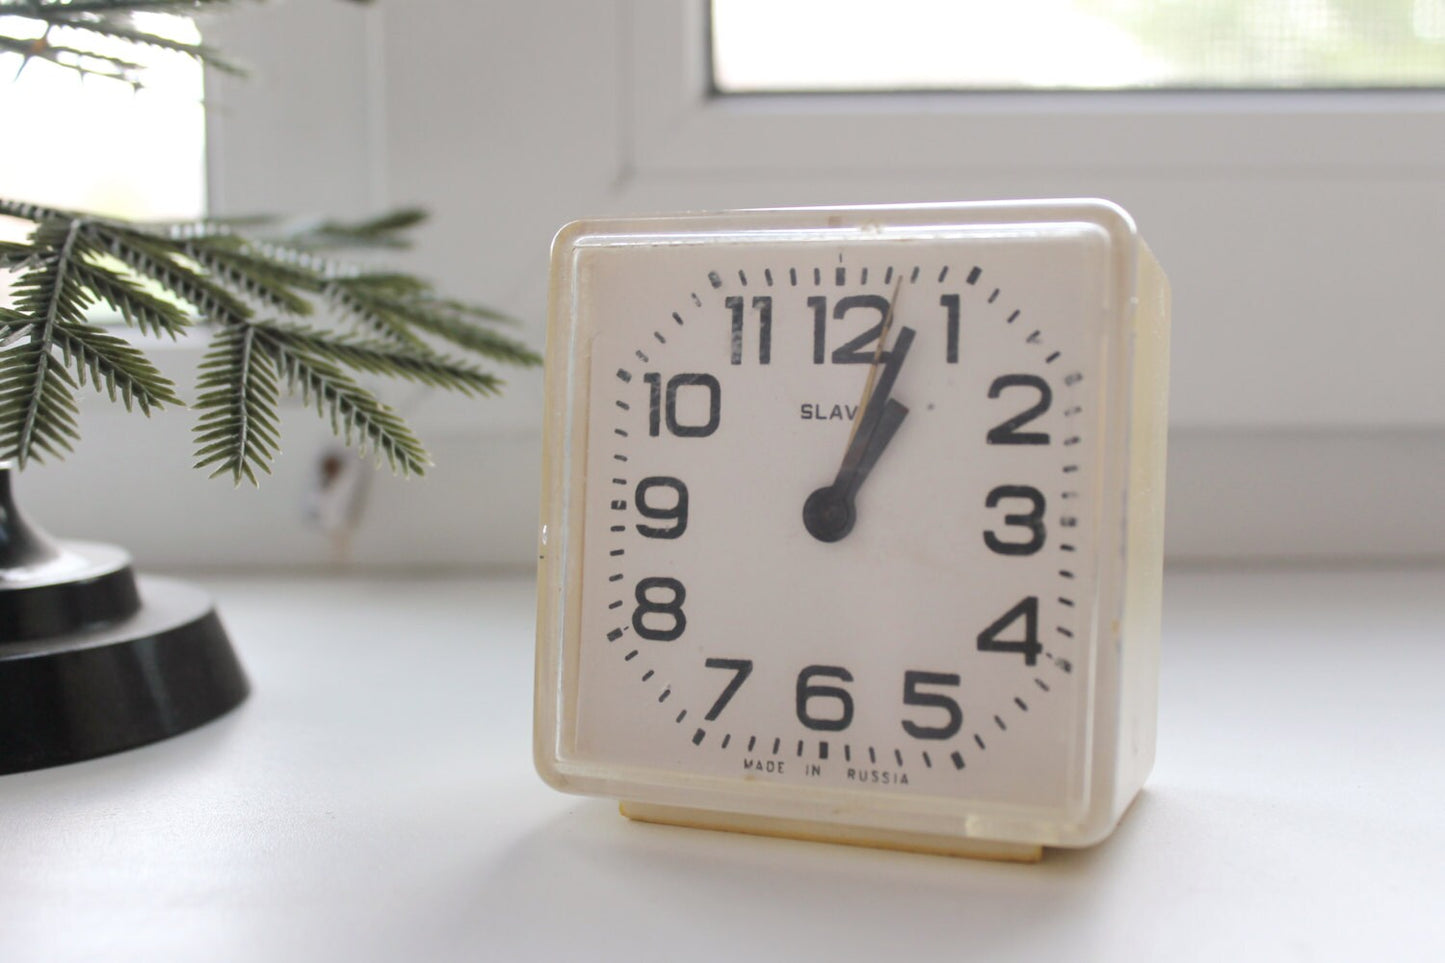 SLAVA - Shabby chic Vintage Rare Alarm Clock - Soviet Mechanical Alarm Clock - Home Decor - Vintage Decor